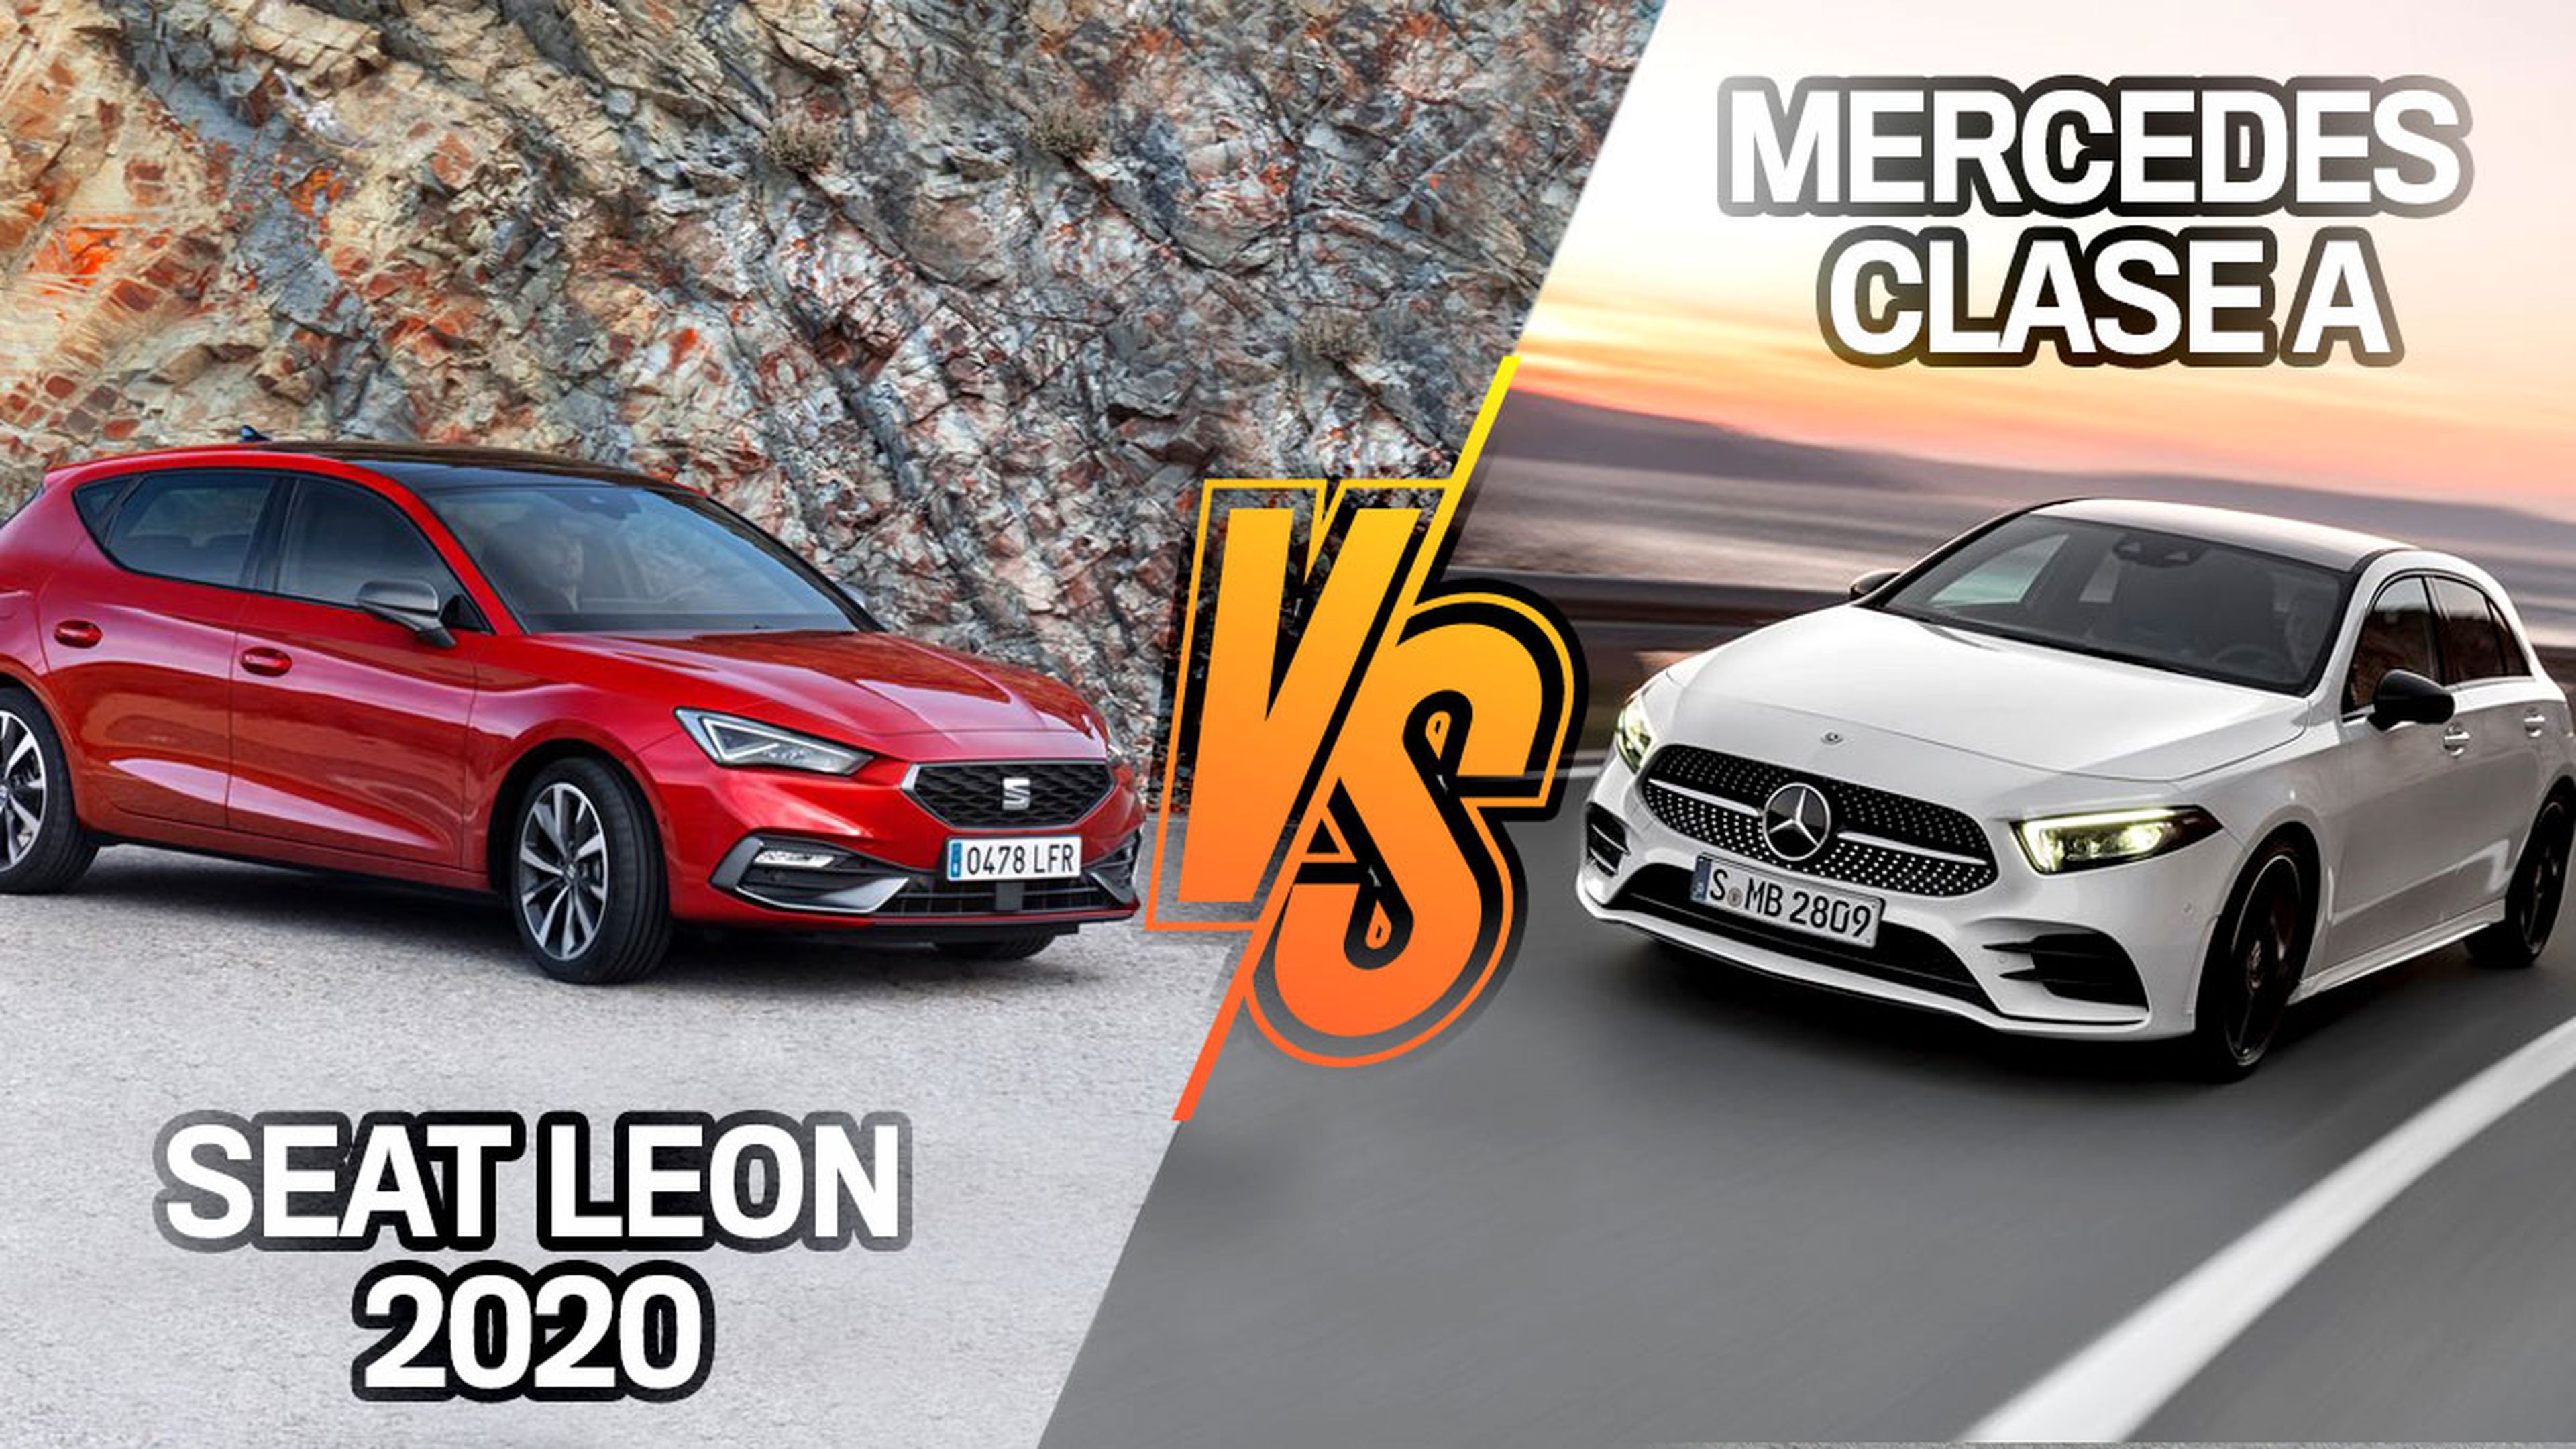 Mercedes Clase A vs Seat Leon 2020